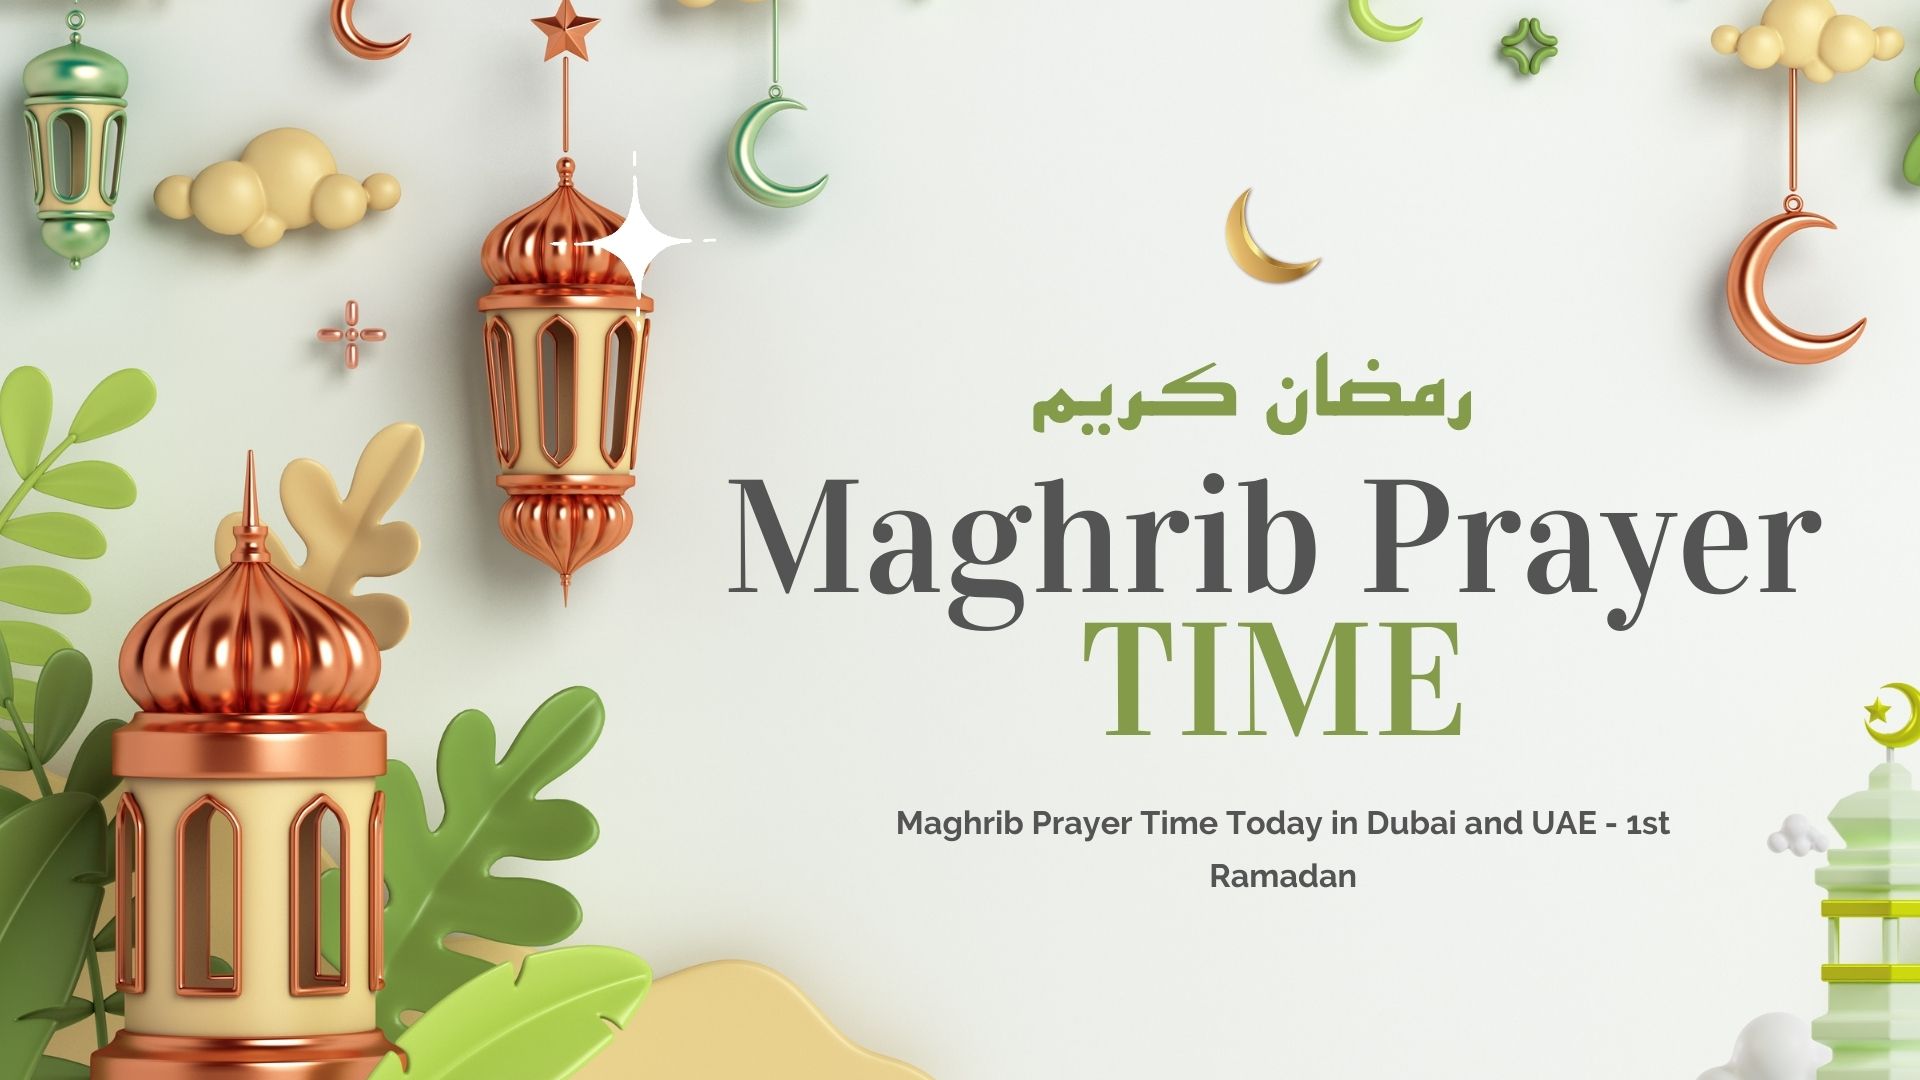 Maghrib Prayer Time Today in Dubai and UAE - 1st Ramadan